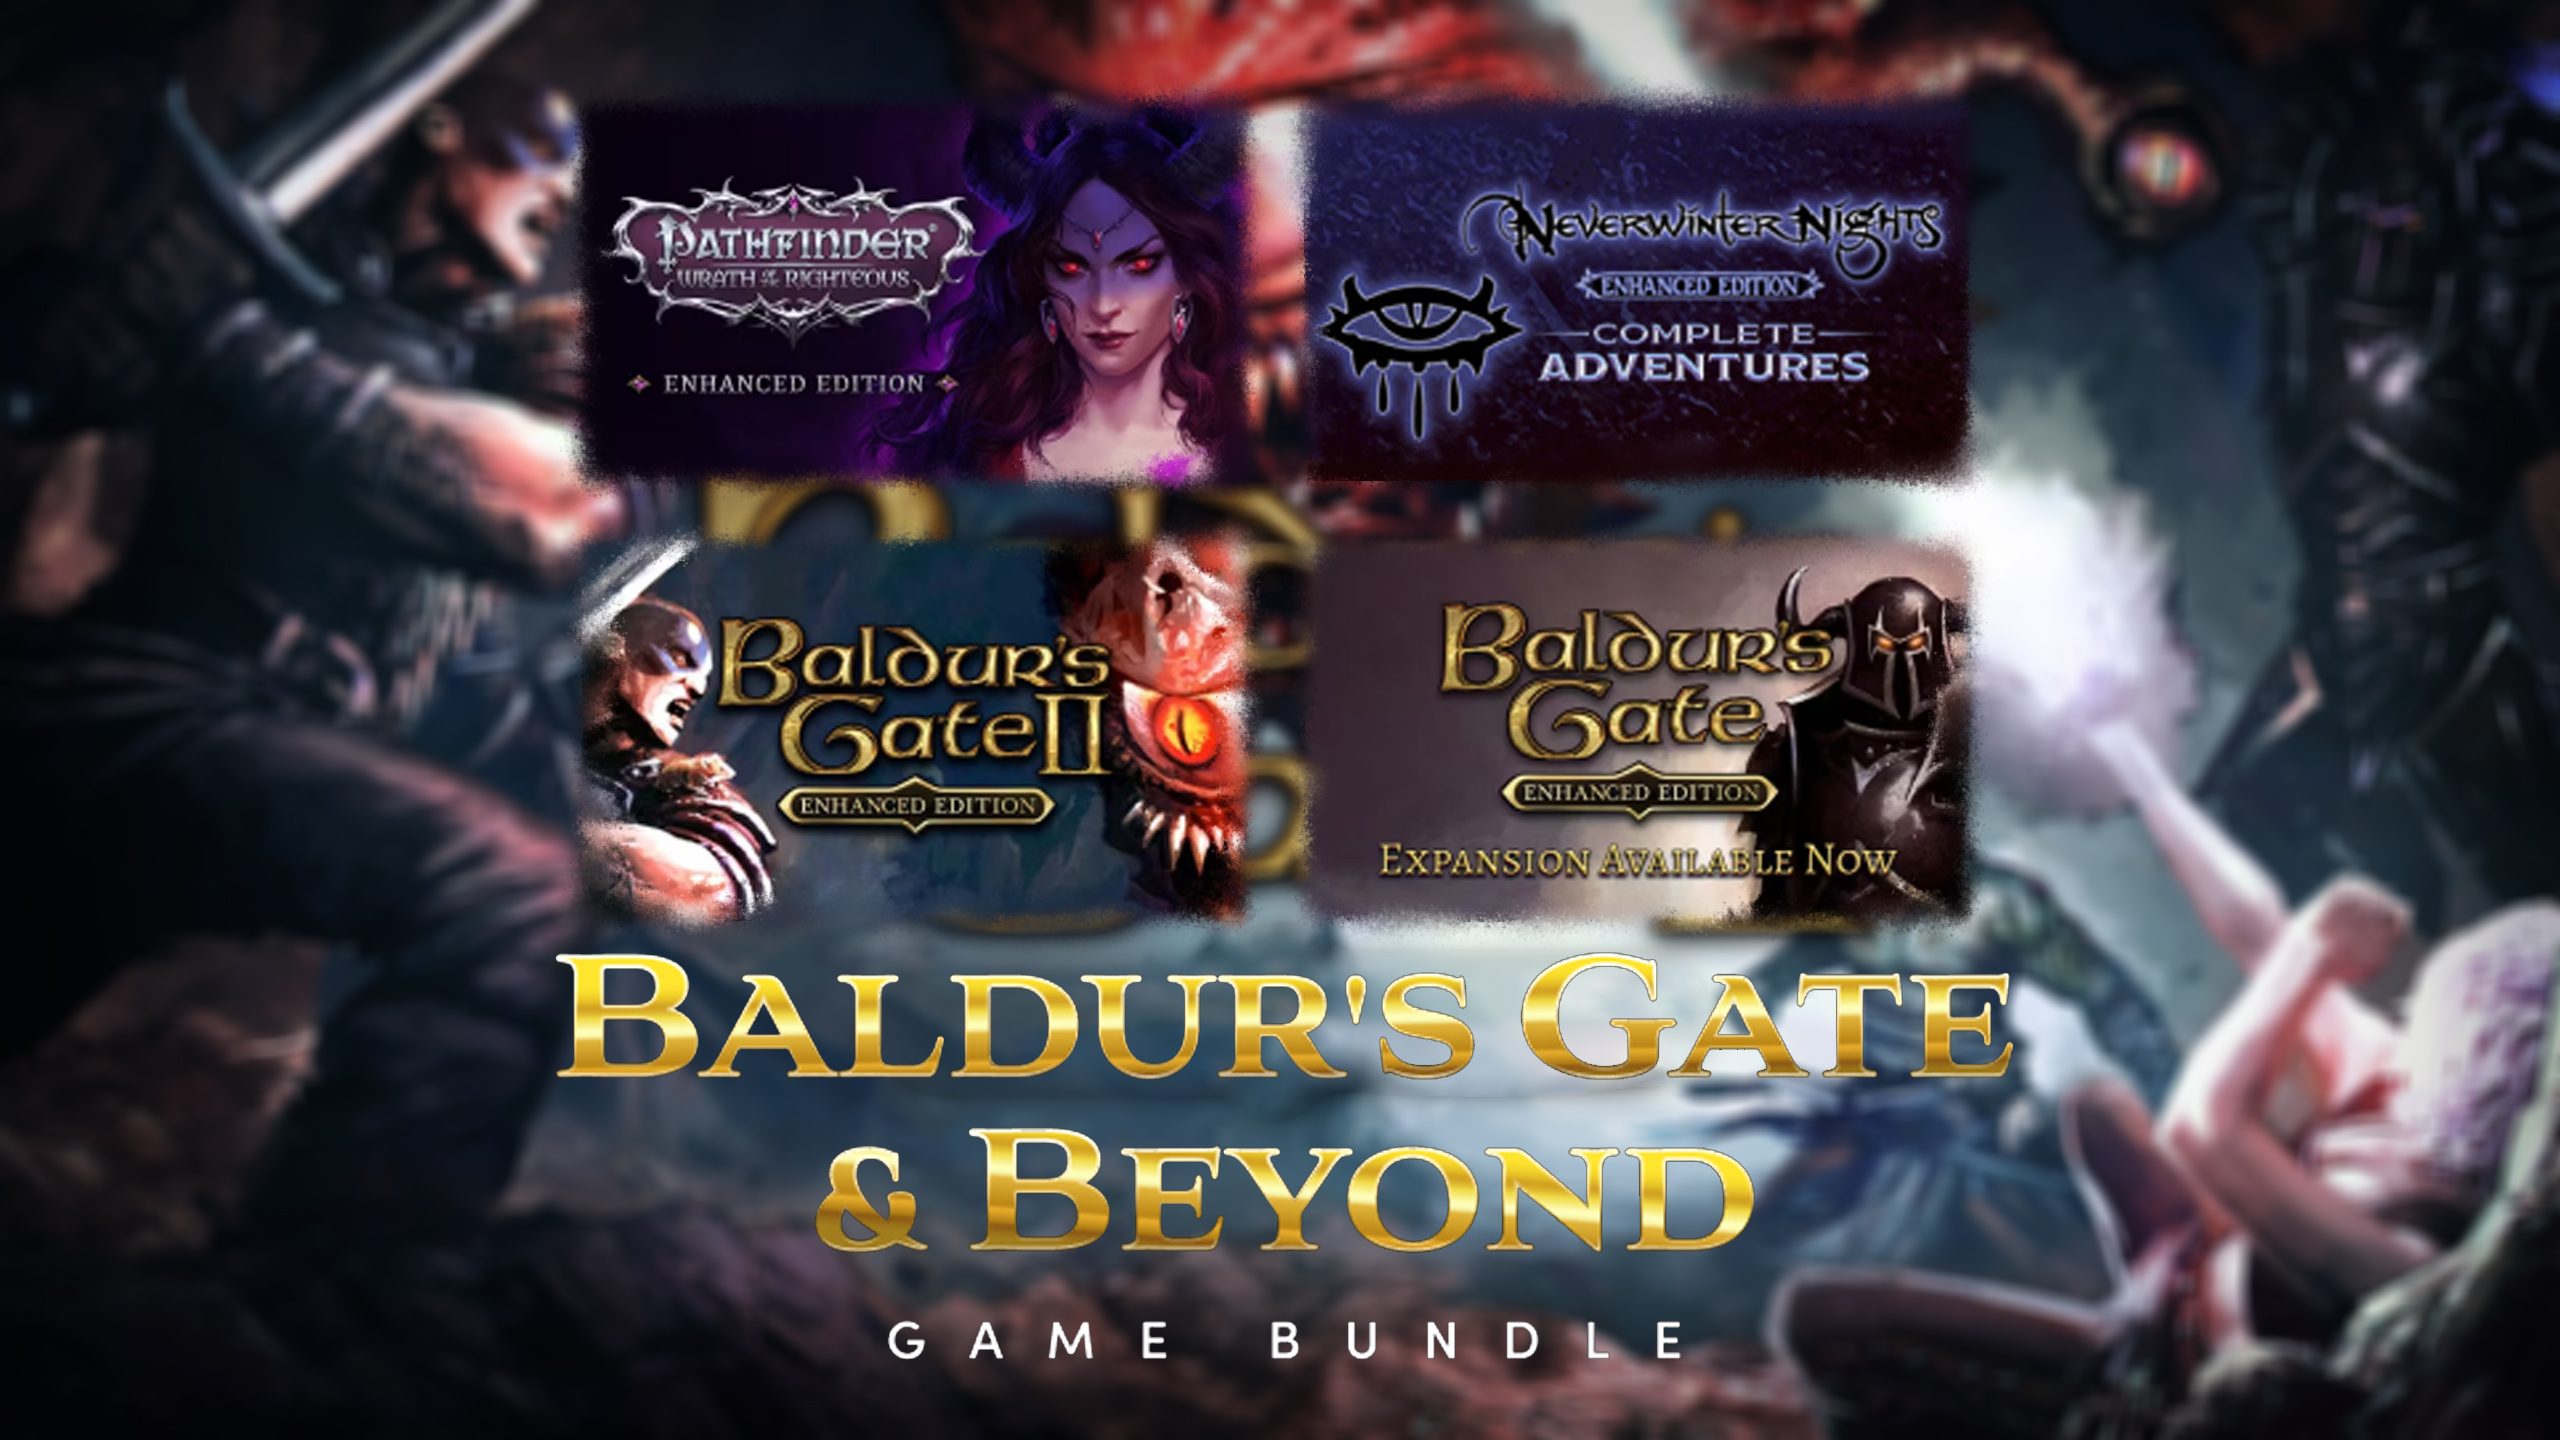 A compilation of key art from Baldur’s Gate titles